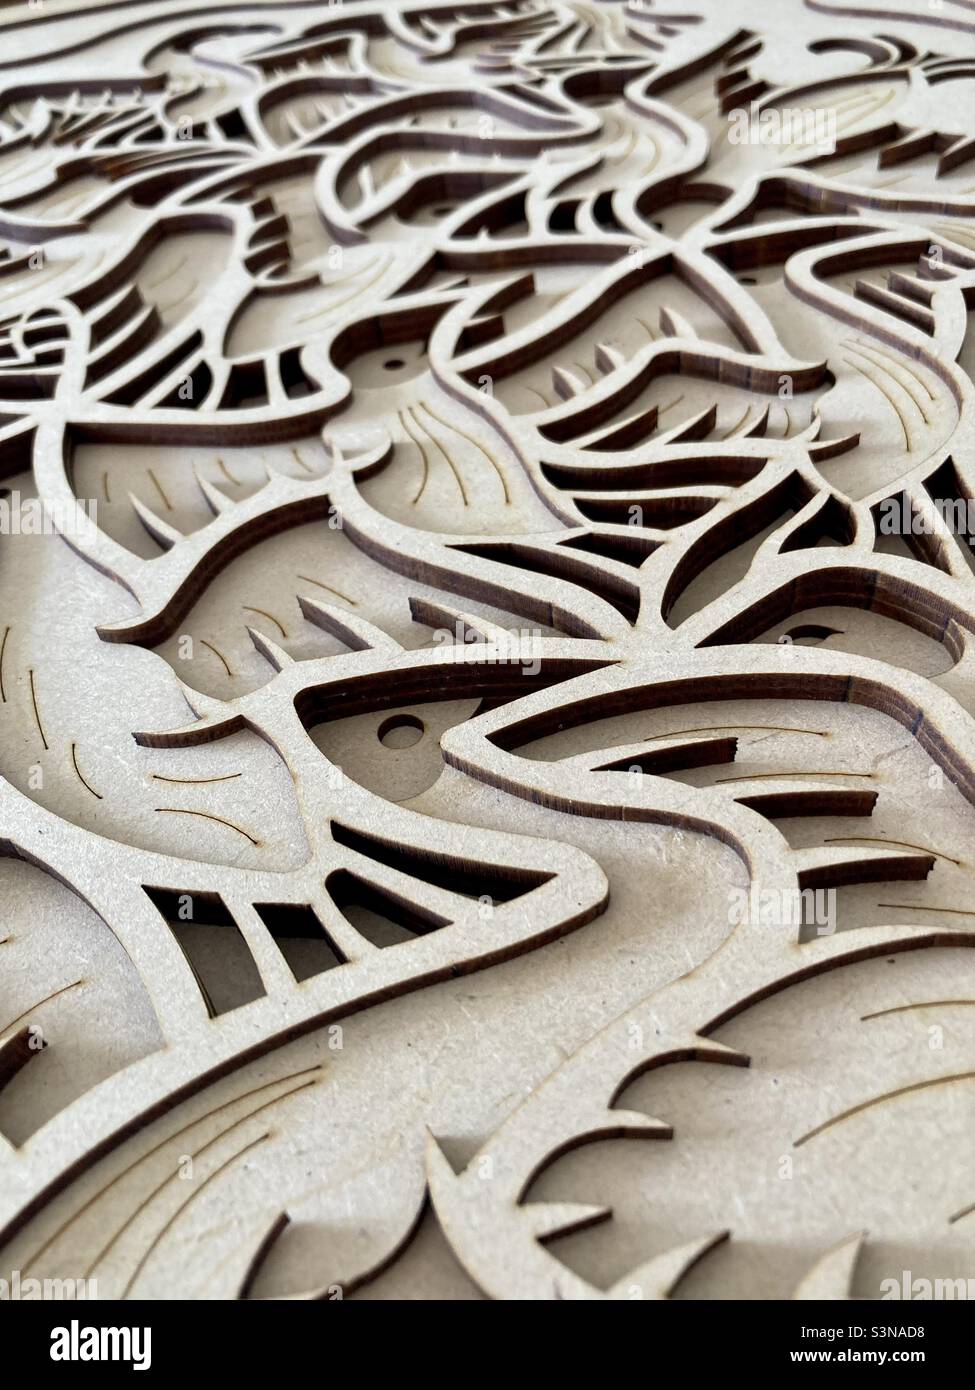 Unique 3D wooden bird art design Stock Photo